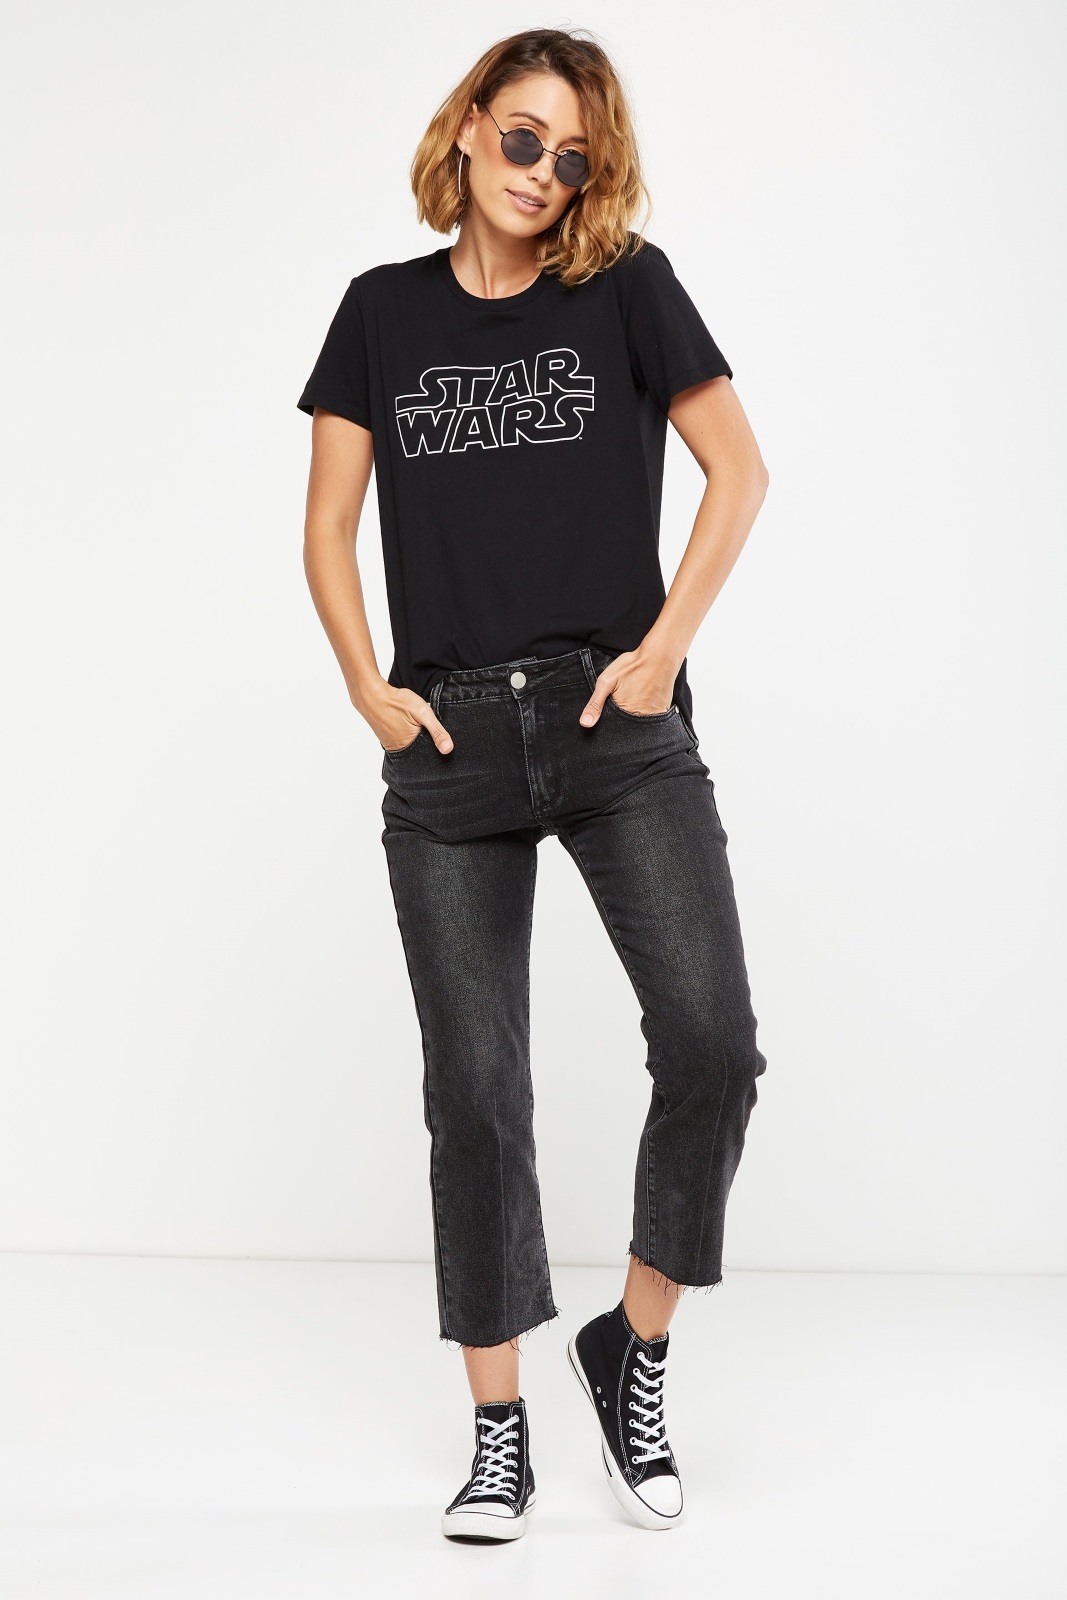 Women's Star Wars logo t-shirt at Cotton On NZ